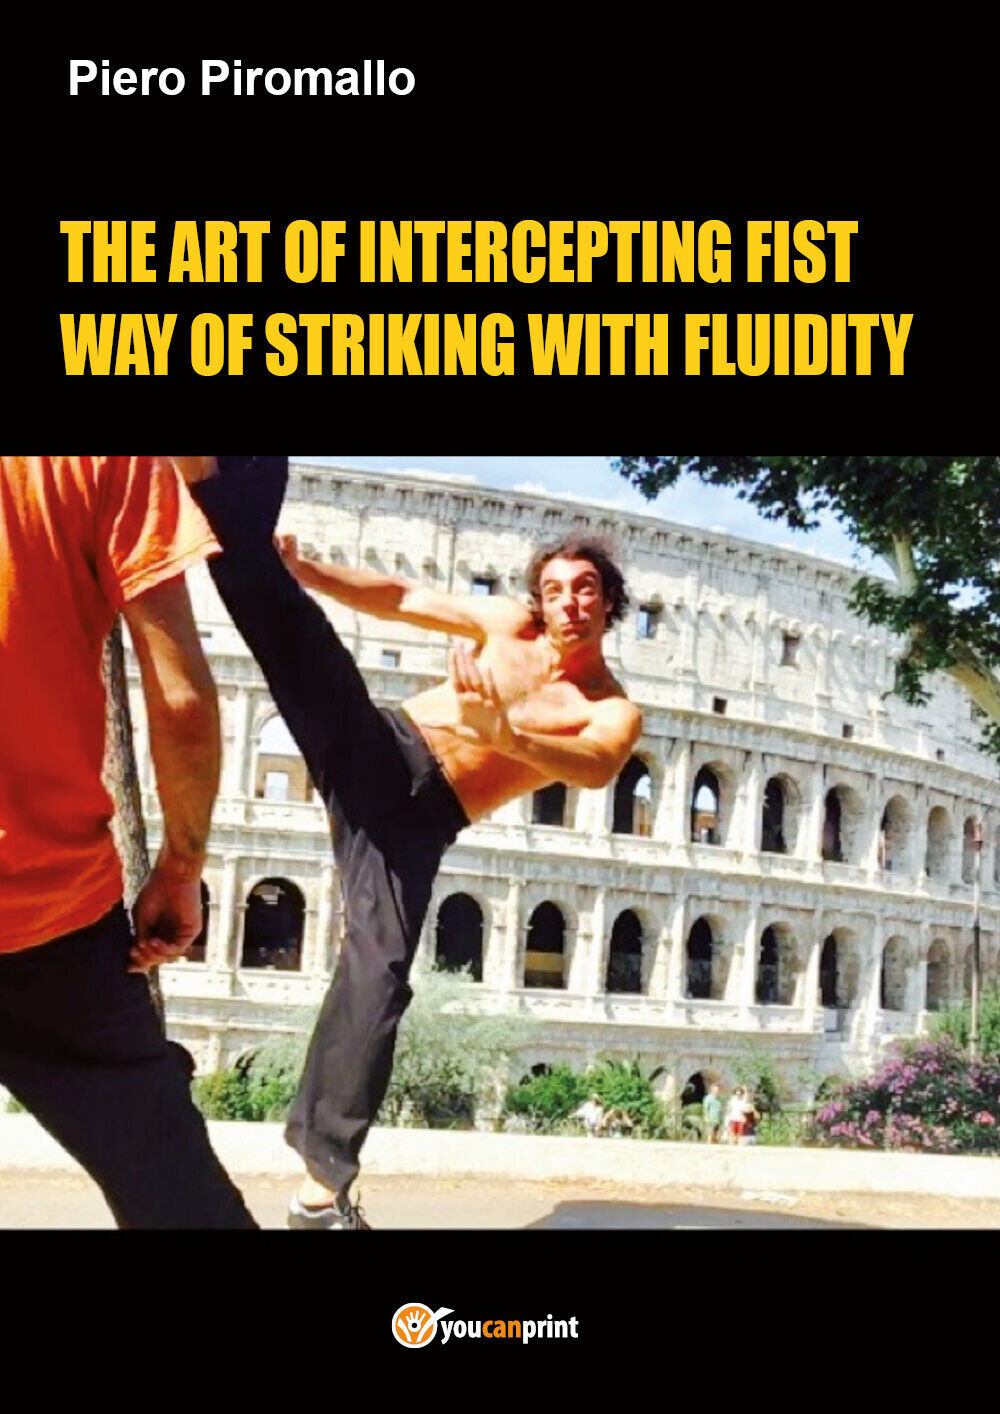 The art of intercepting fist way of fluidity in striking - Piero Piromallo, 